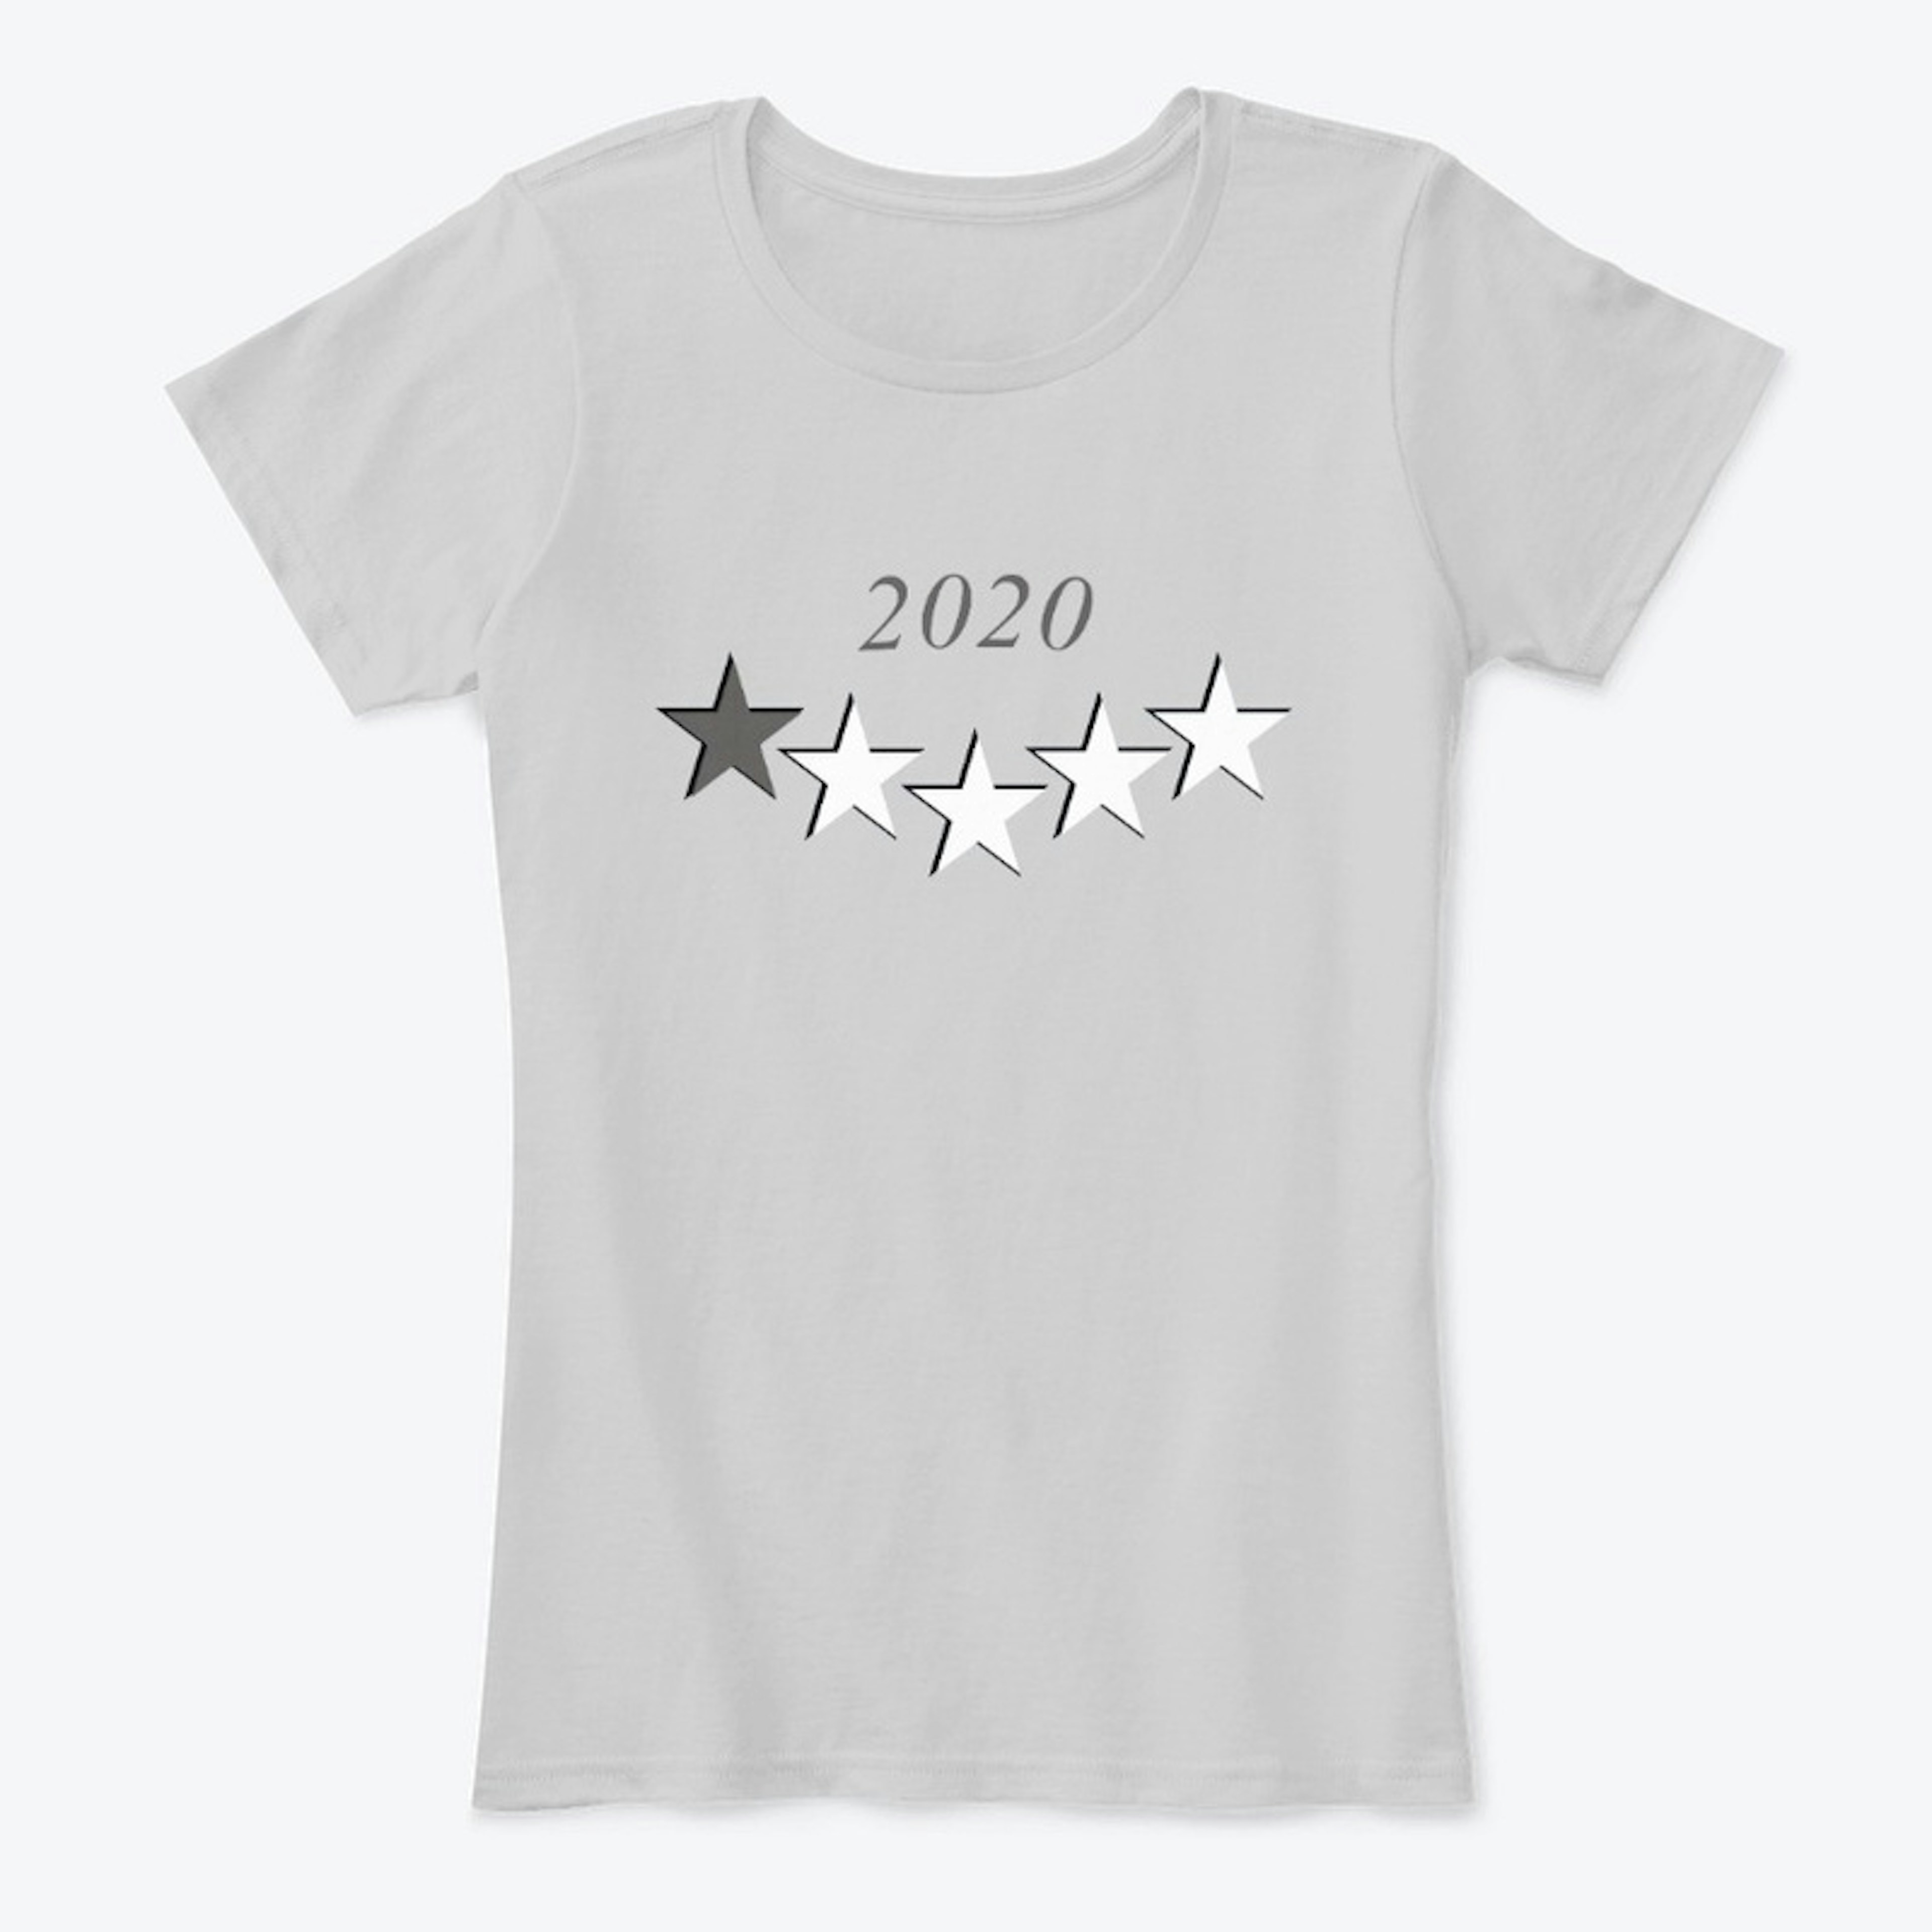 I Give 2020 One Star